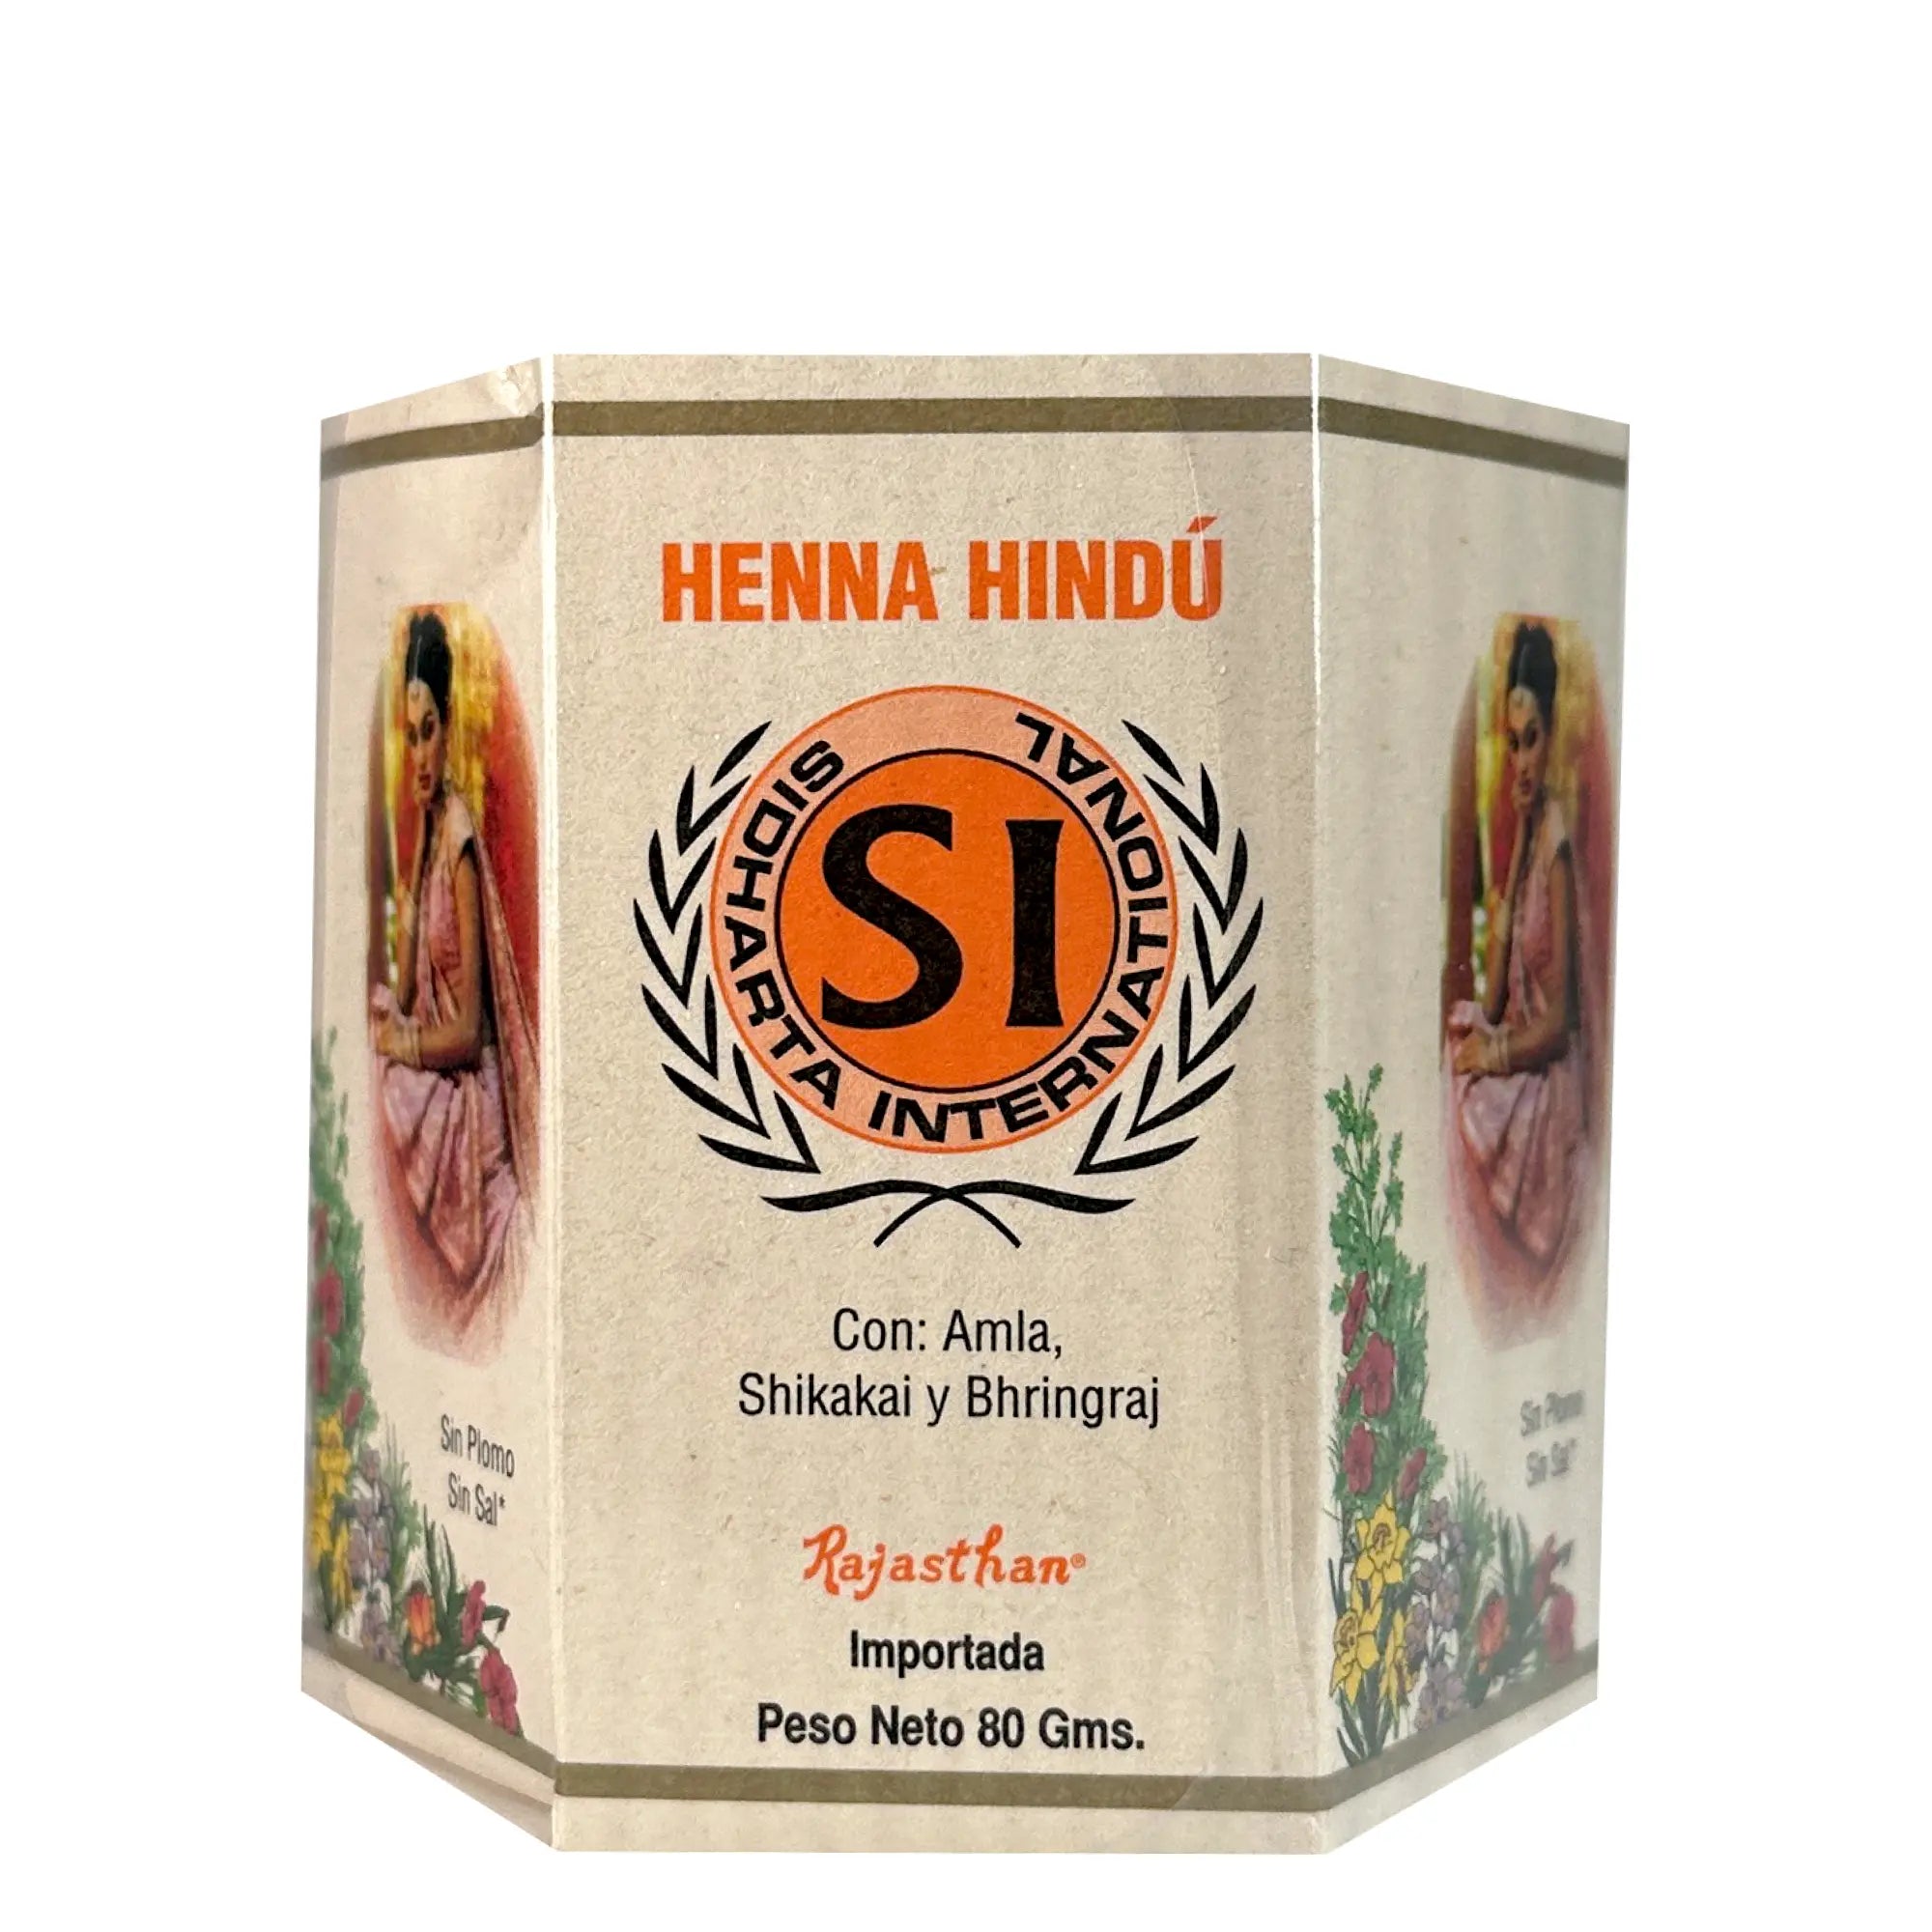 Henna Hindú Tono Cafe 80g Sidharta international